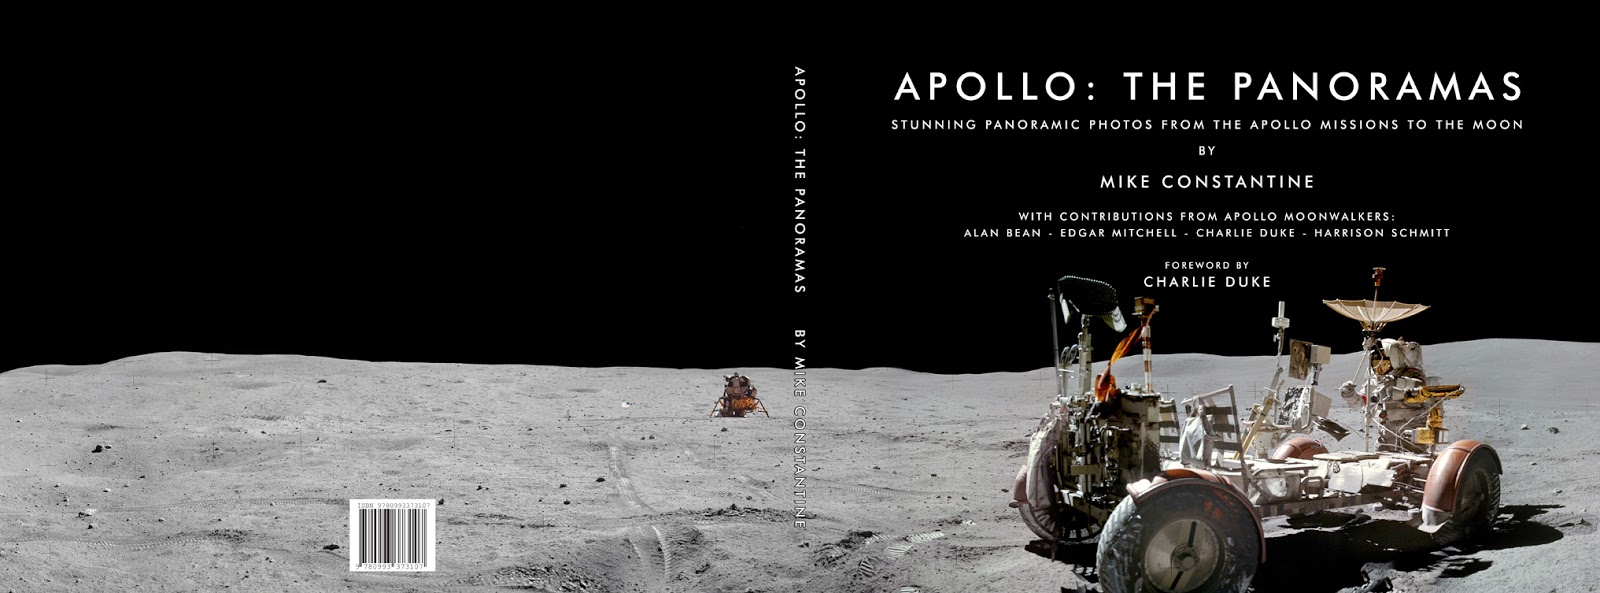 Луны в lethal company. Аполлон 16 на Луне. Аполлон 16 фото на Луне. Апполо 11 на Луне. Аполлон 16 на Луне 1972.